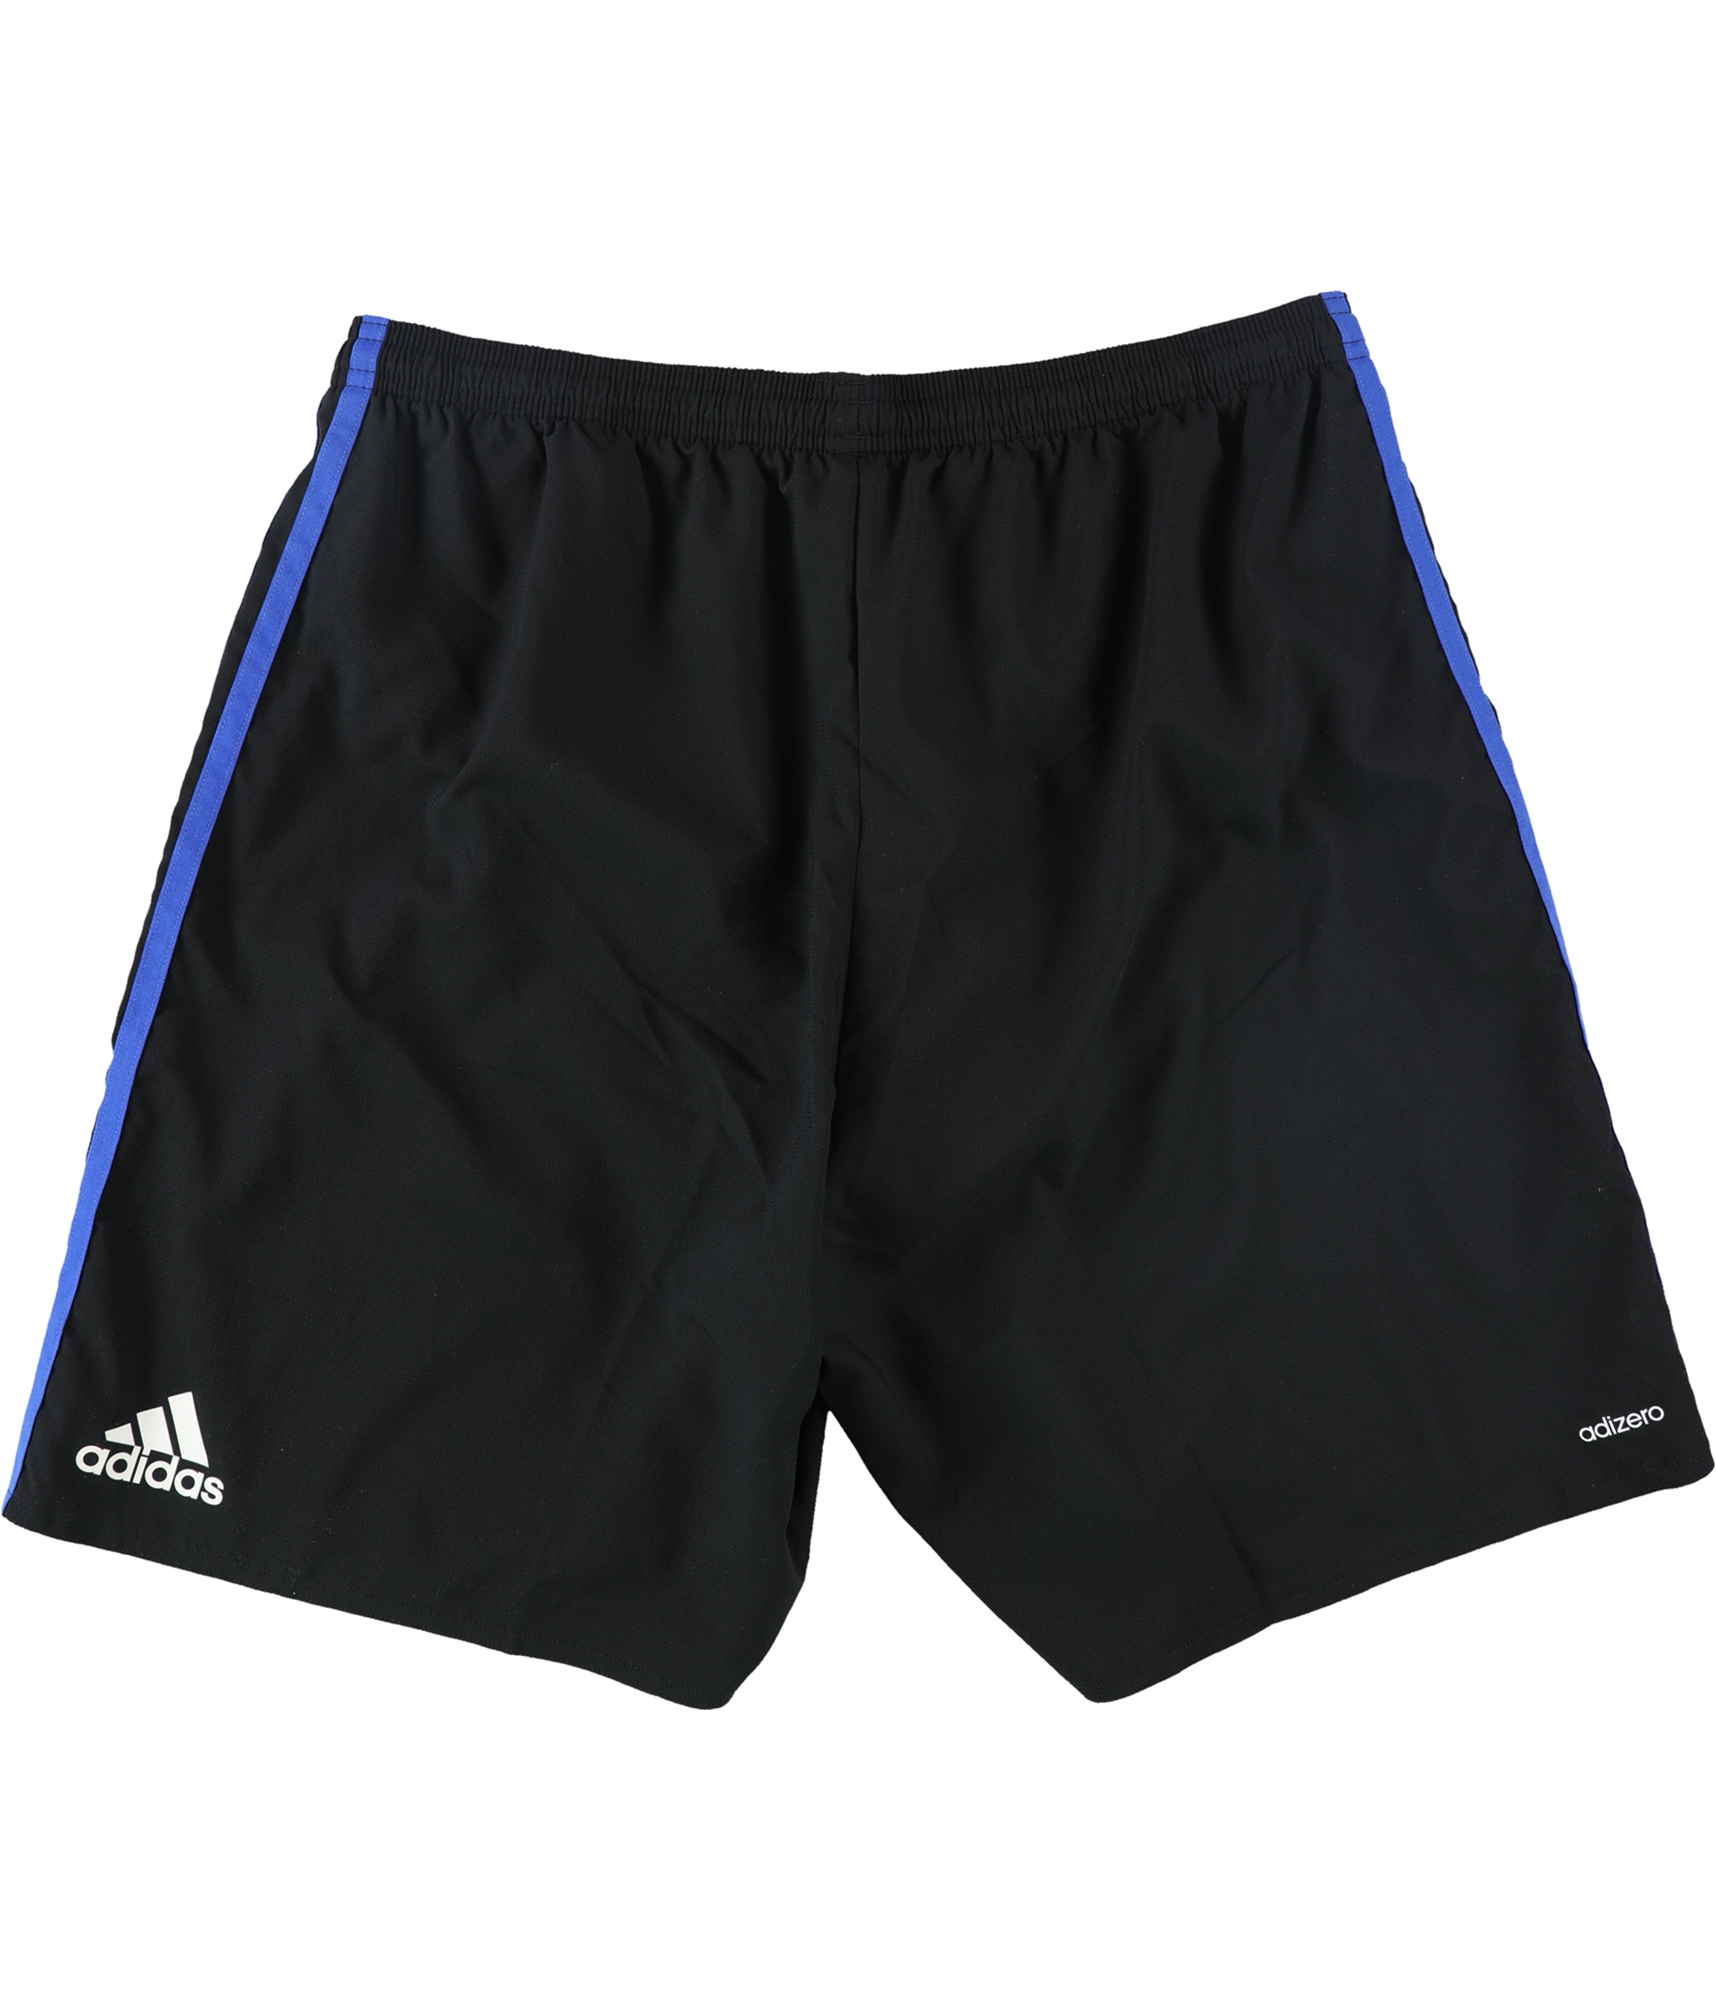 Black-blue-striped-soccer-gym-shorts